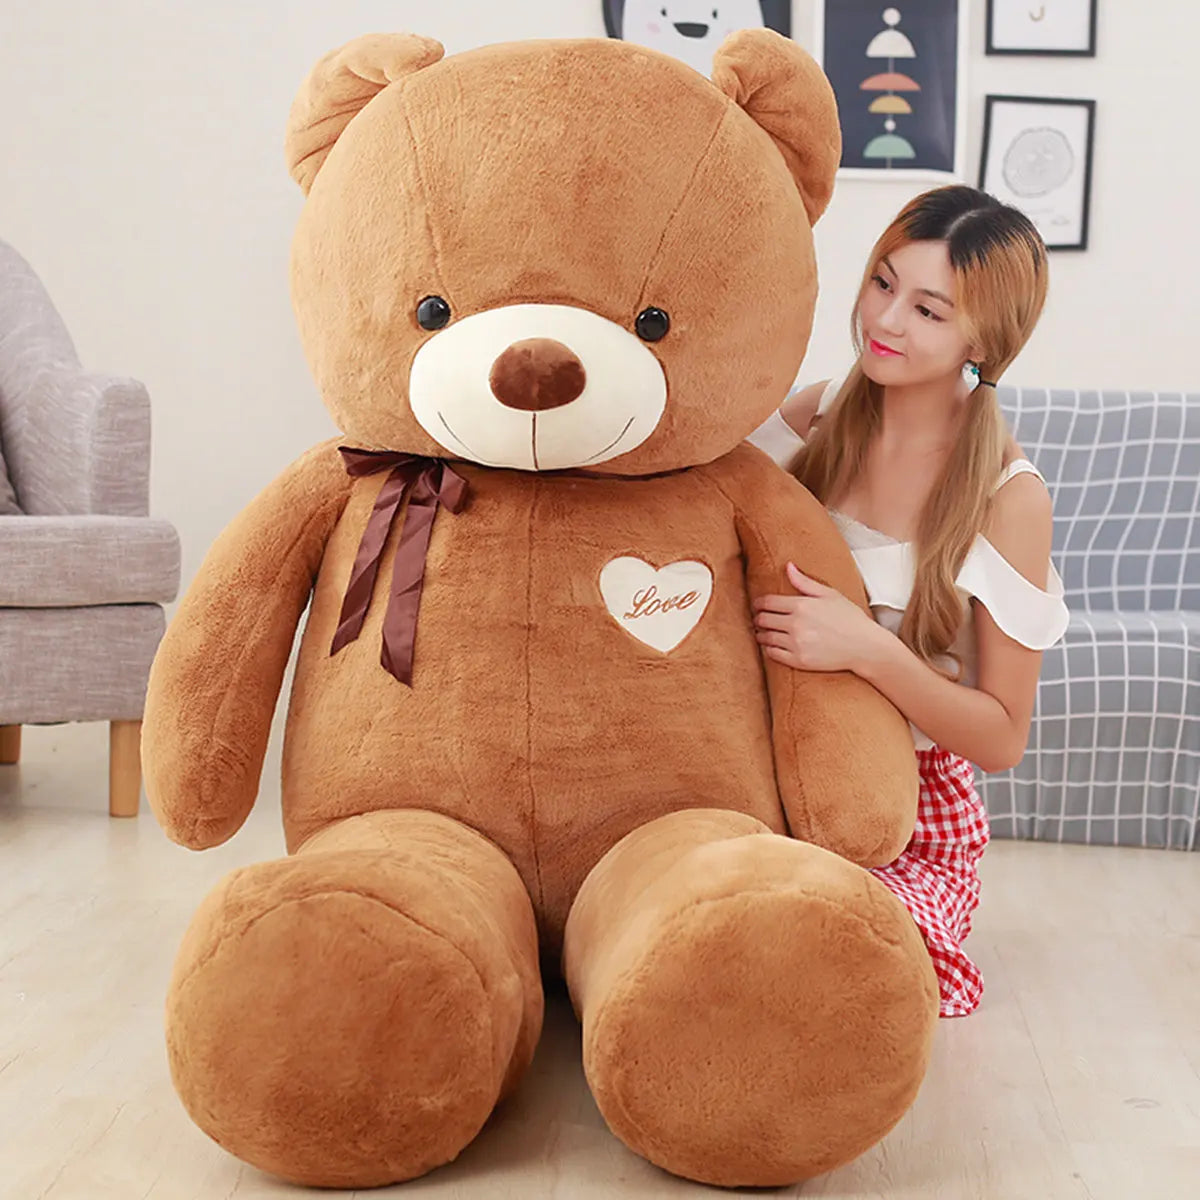 Cuddly Big Bear Plush Toy - Perfect Stuffed Animal Companion - ToylandEU